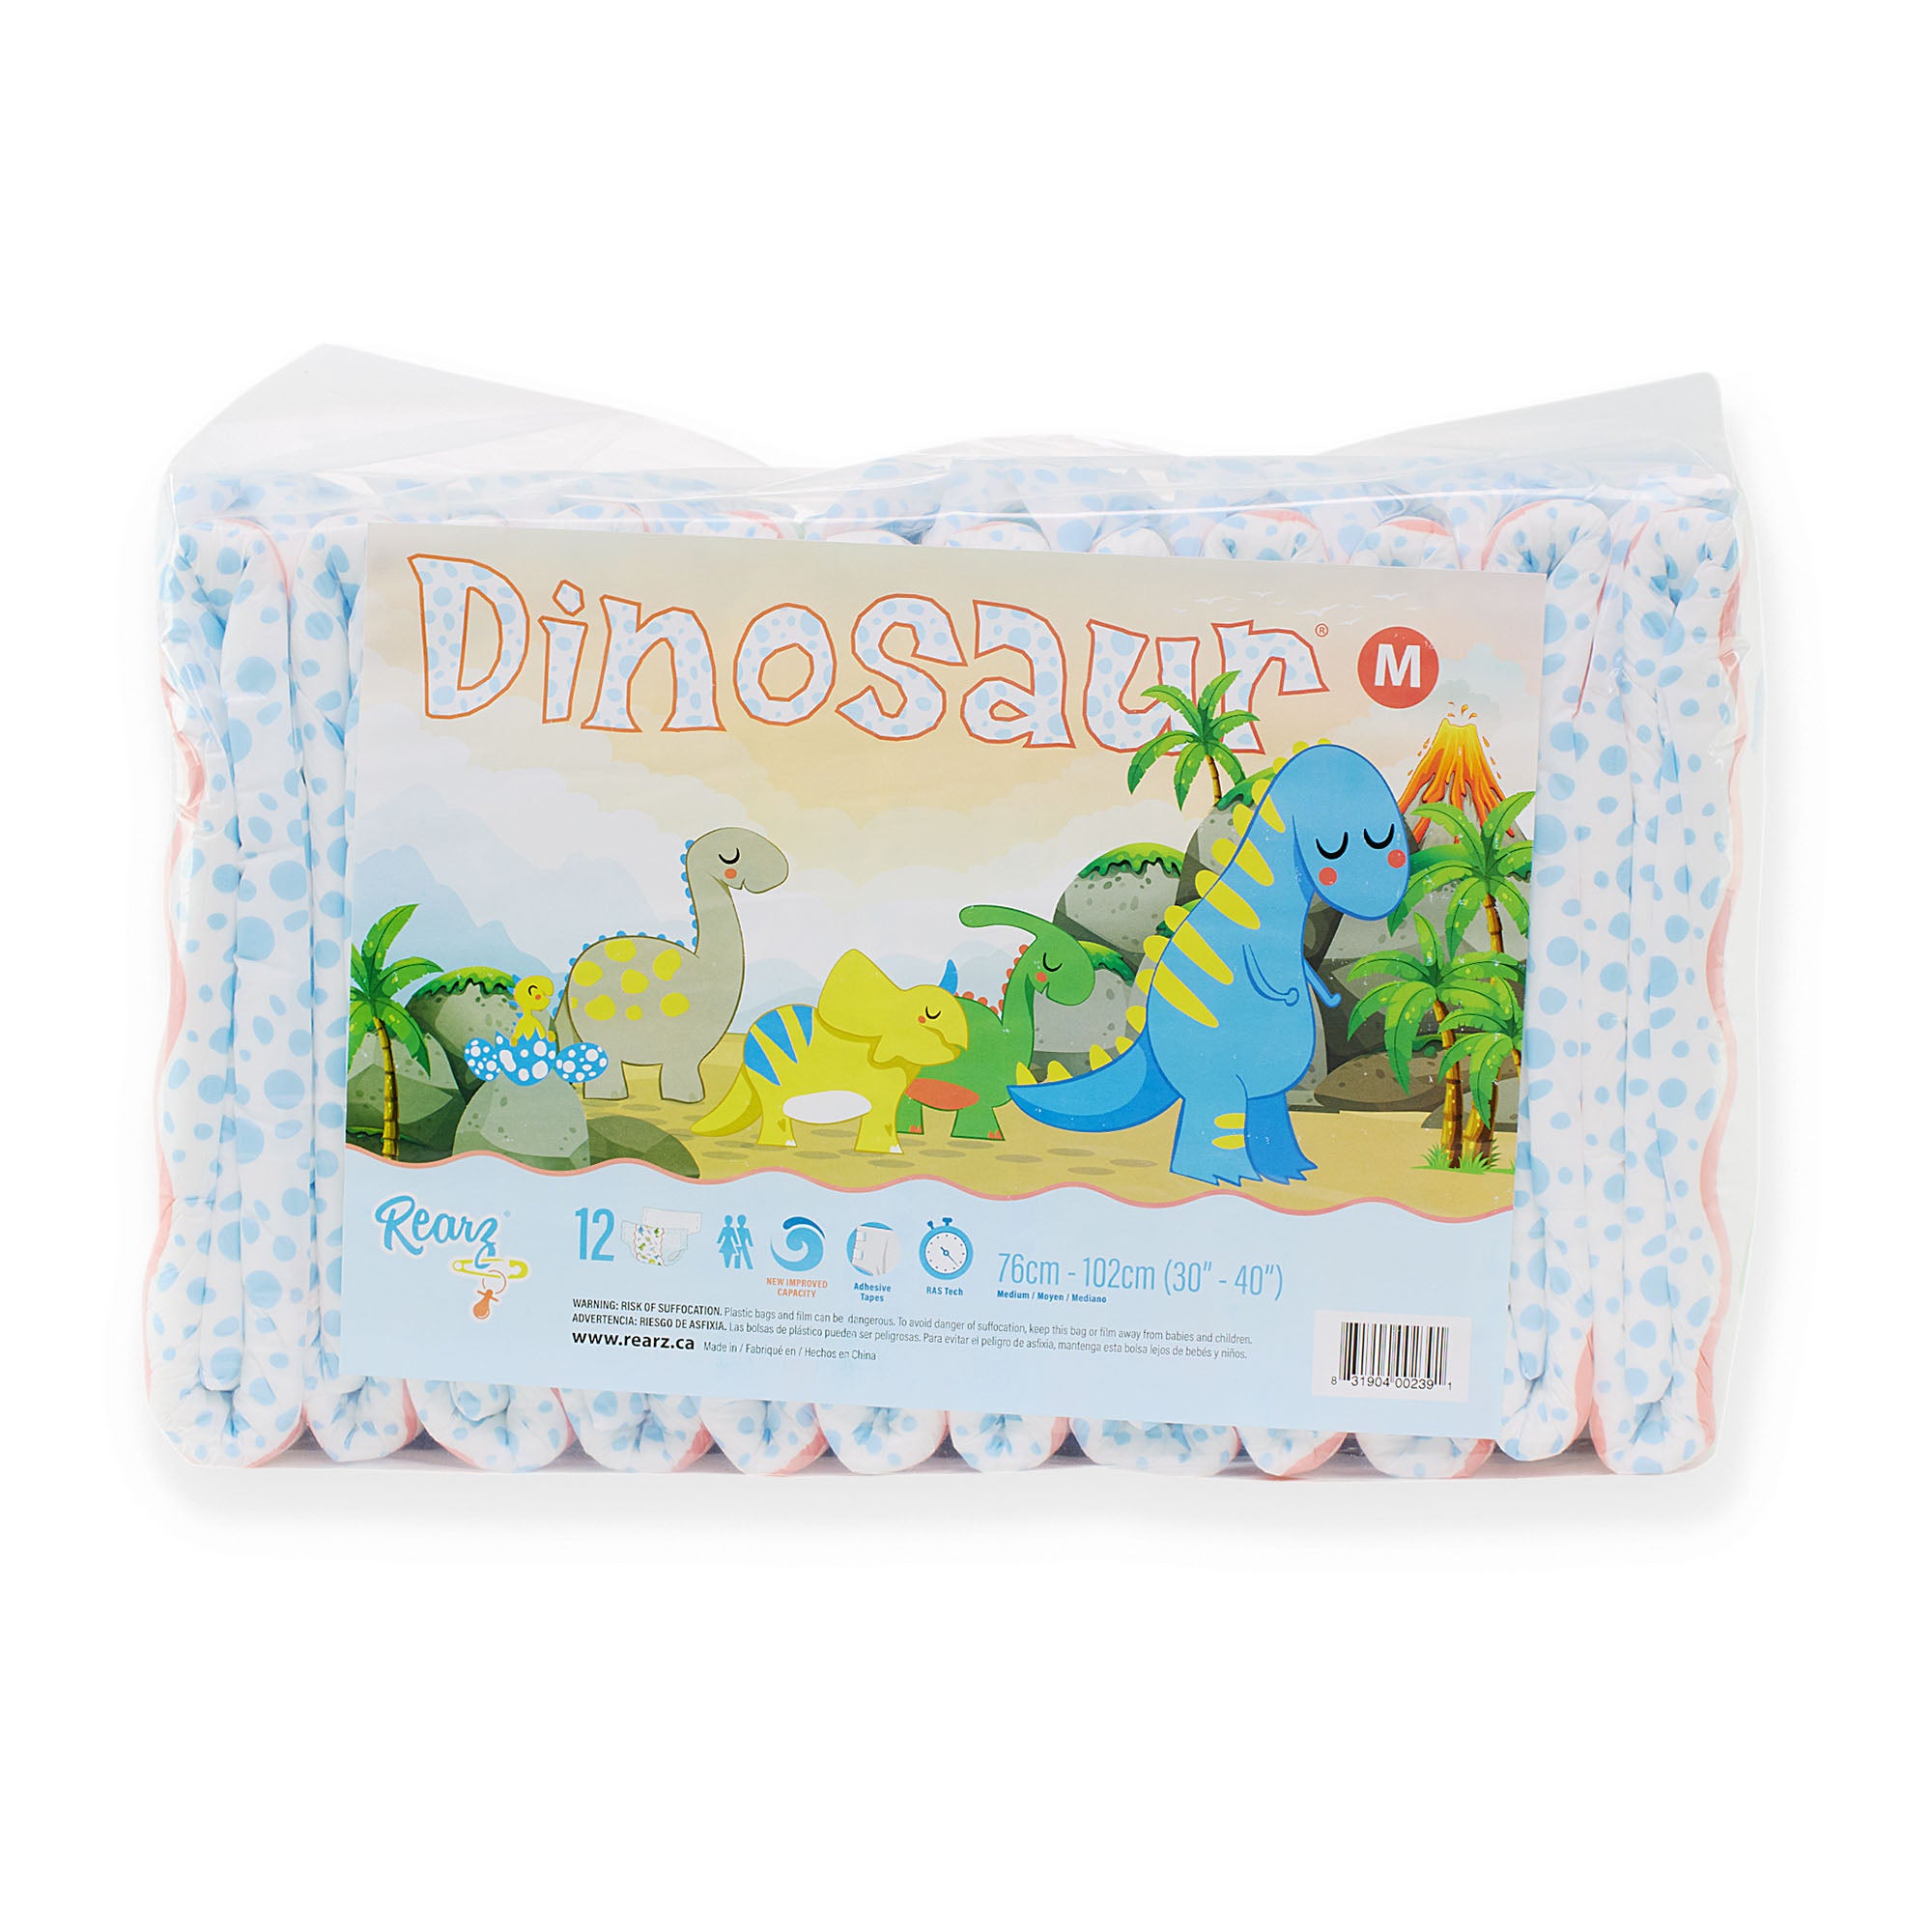 Rearz Dinosaur Elite Adult Diapers